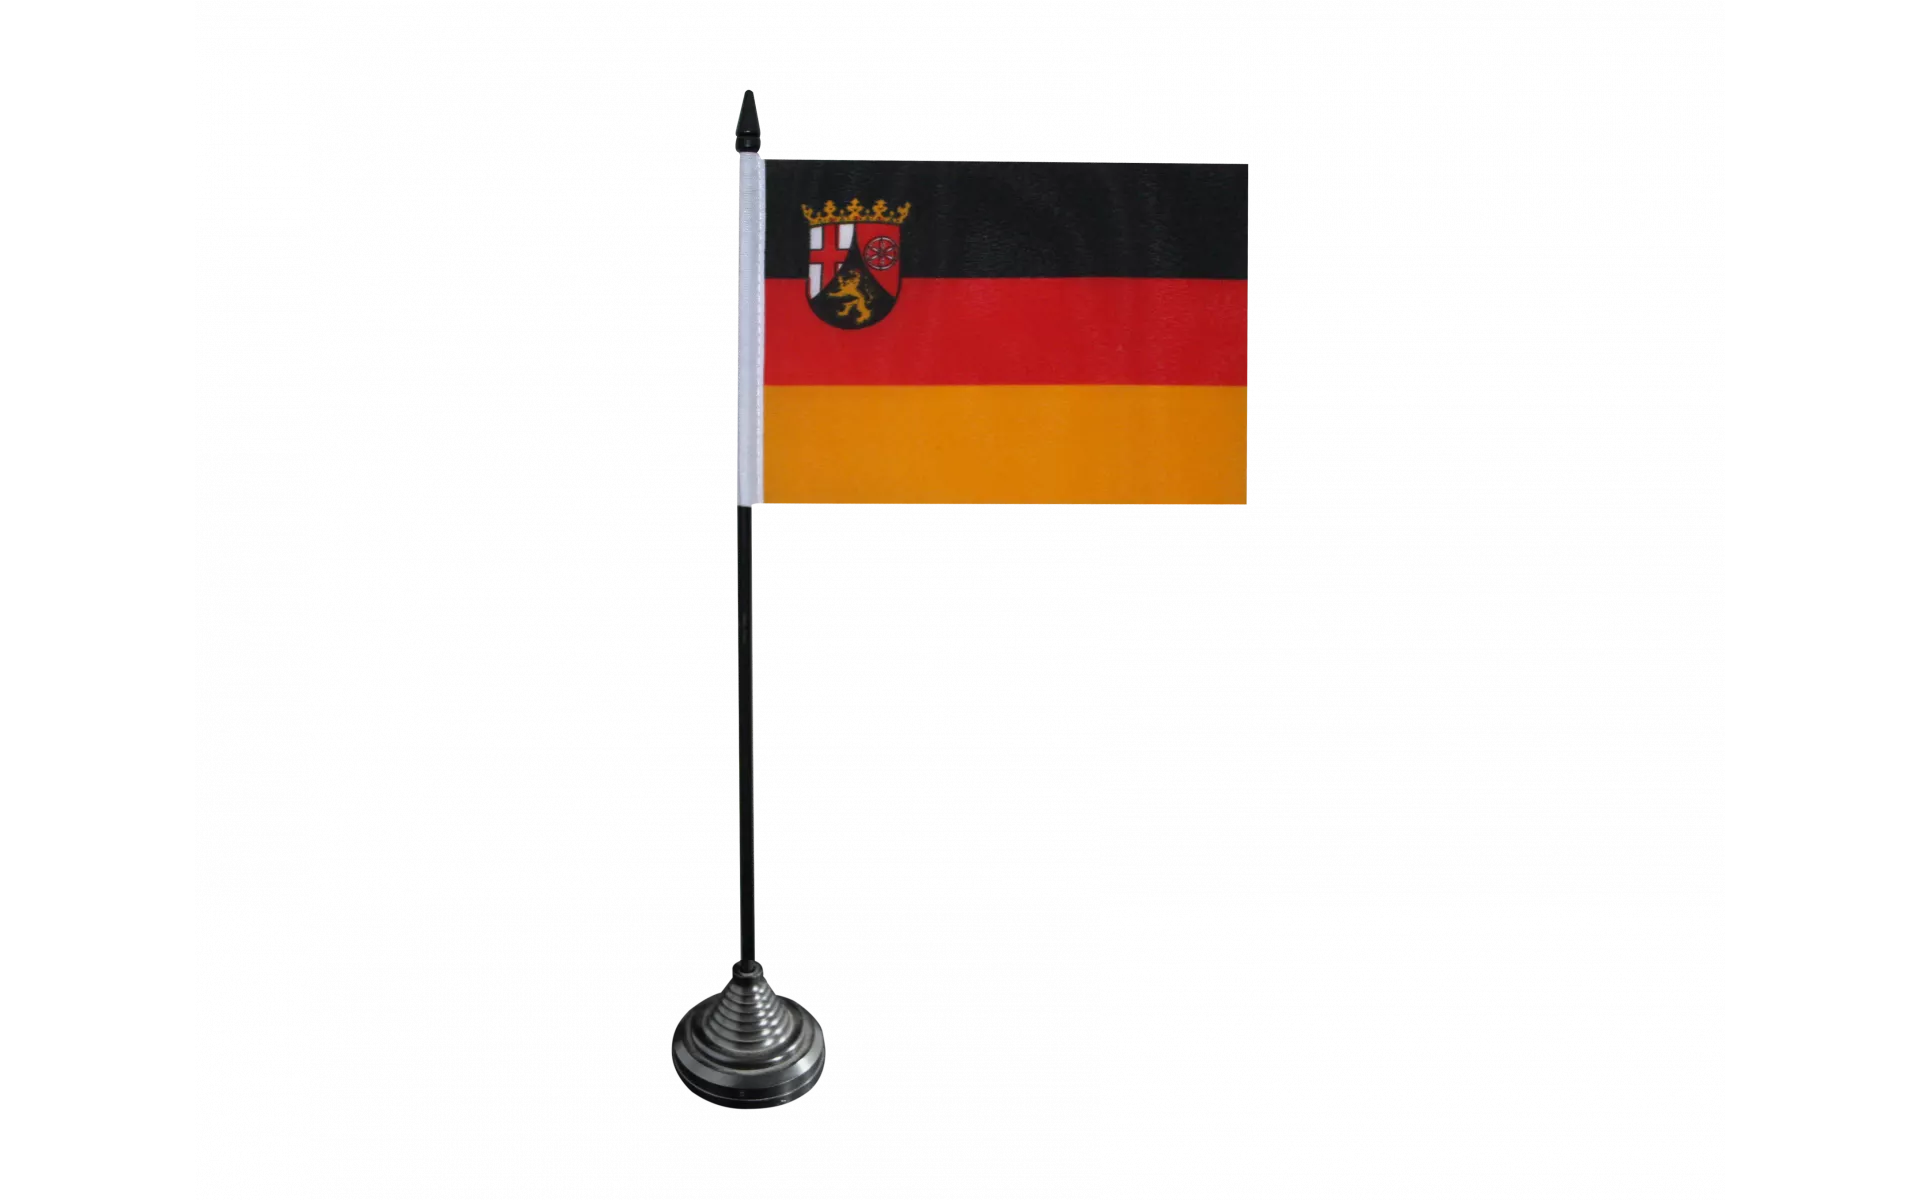 Rheinland-Pfalz TISCHFAHNE 14 x 21 cm flaggen AZ FLAG TISCHFLAGGE Rheinland-Pfalz 21x14cm 